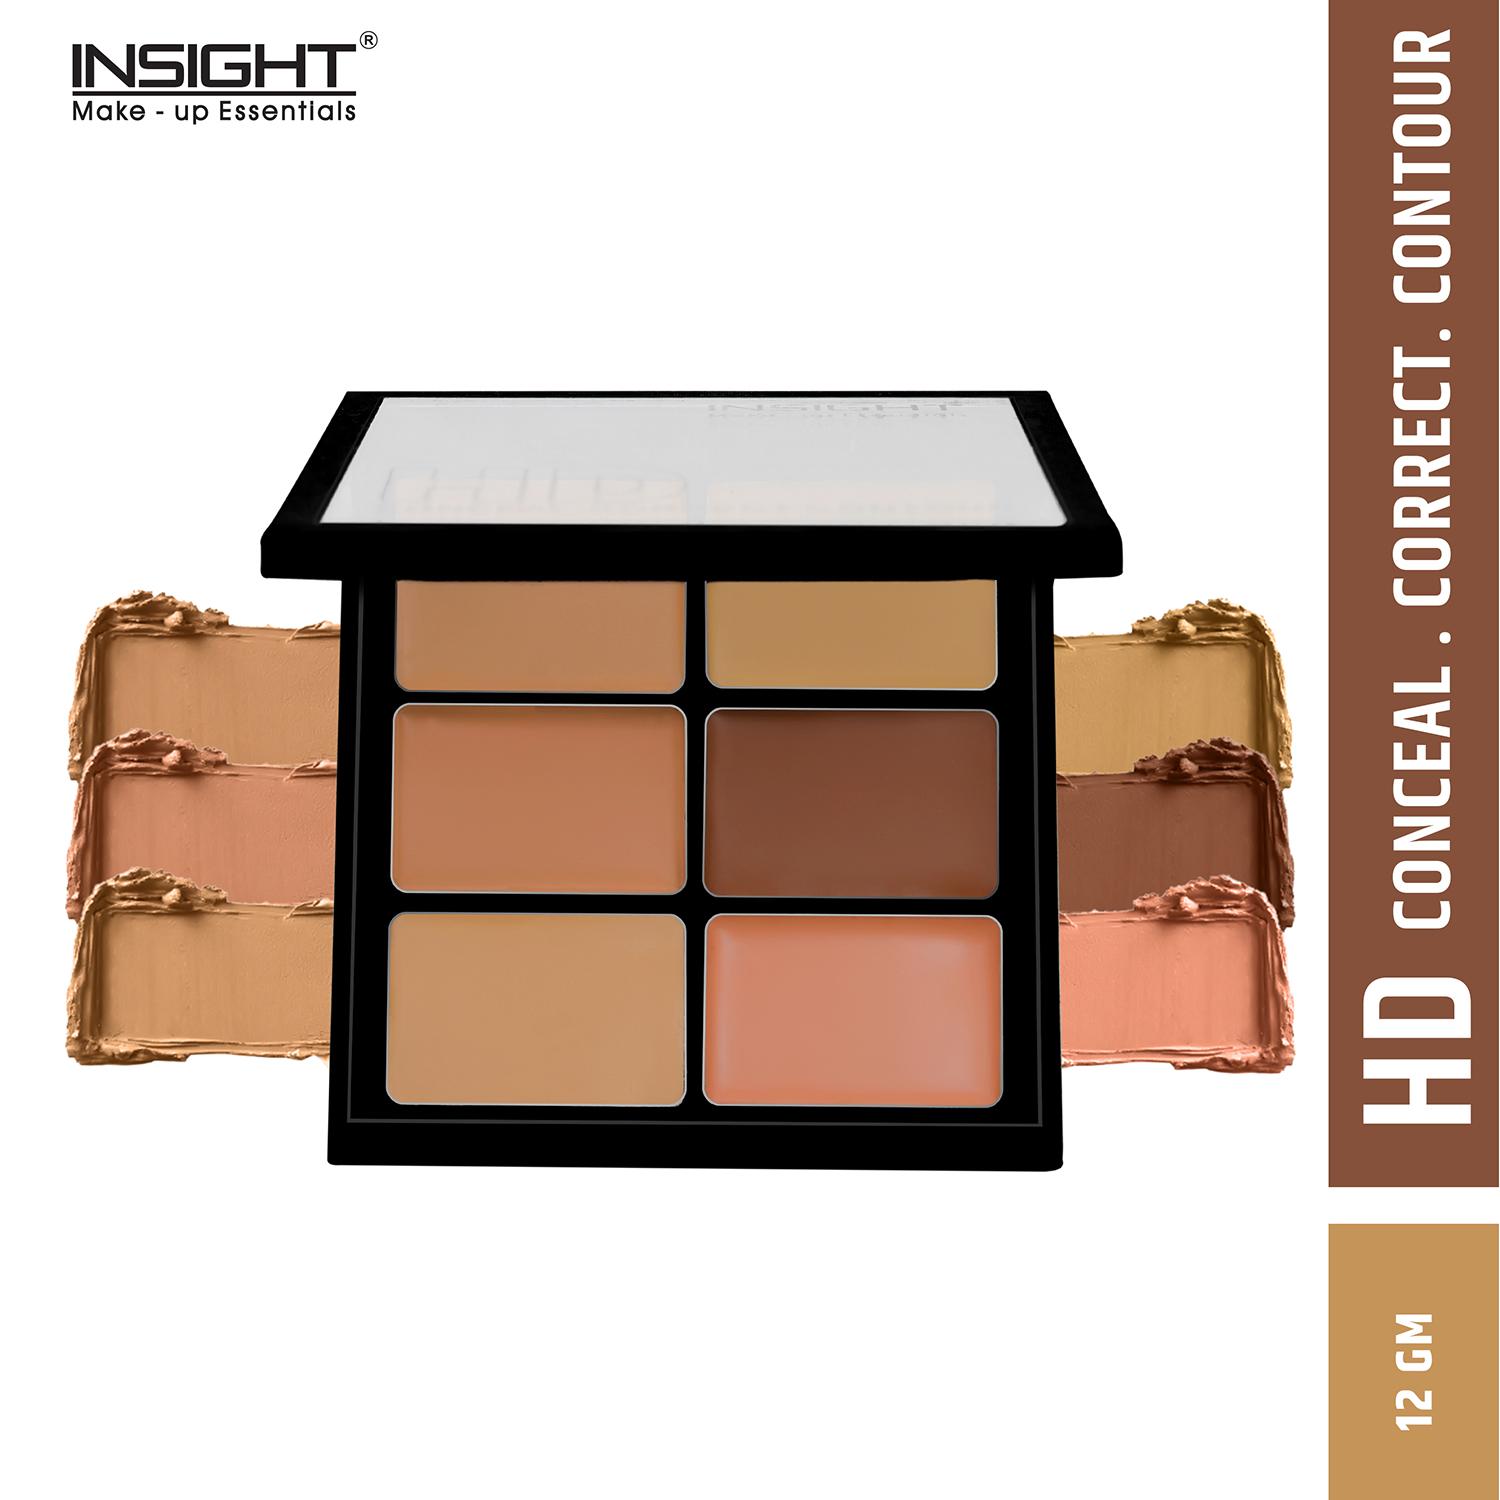 Insight Cosmetics | Insight Cosmetics HD Conceal Correct Contour - Light Skin (12g)